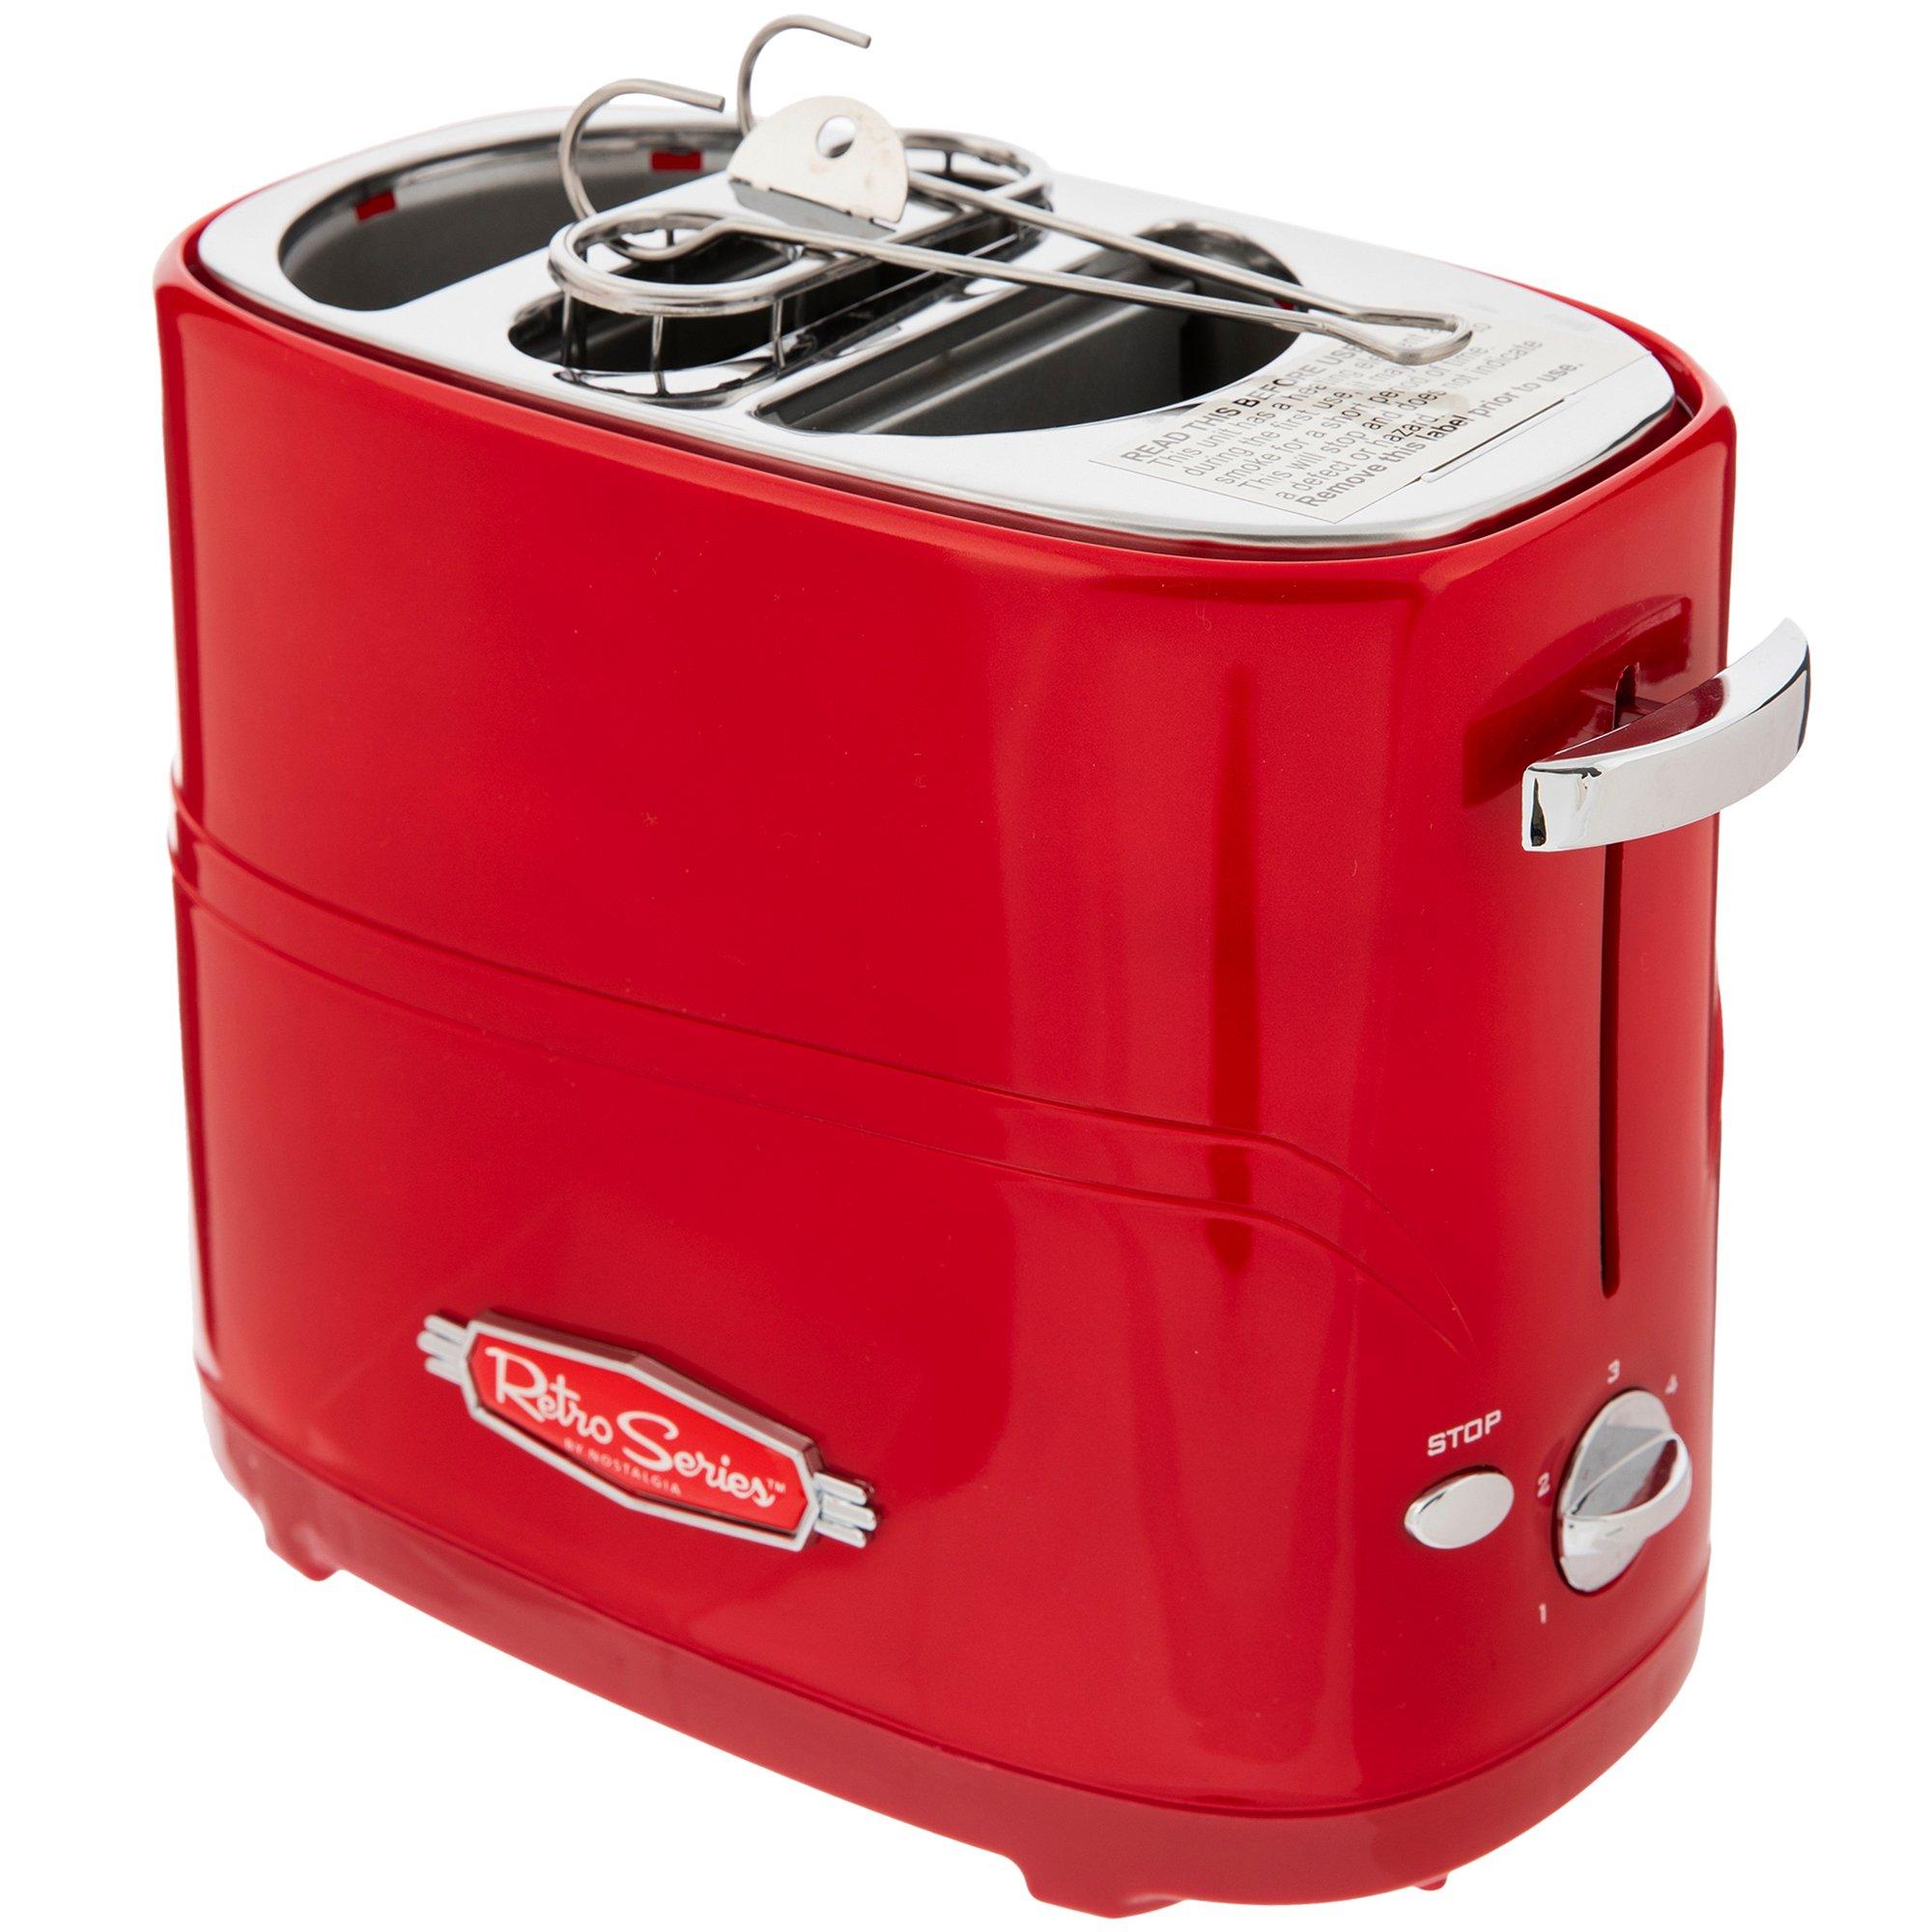 Nostalgia Electrics Retro Series Pop-Up Hot Dog Toaster Red